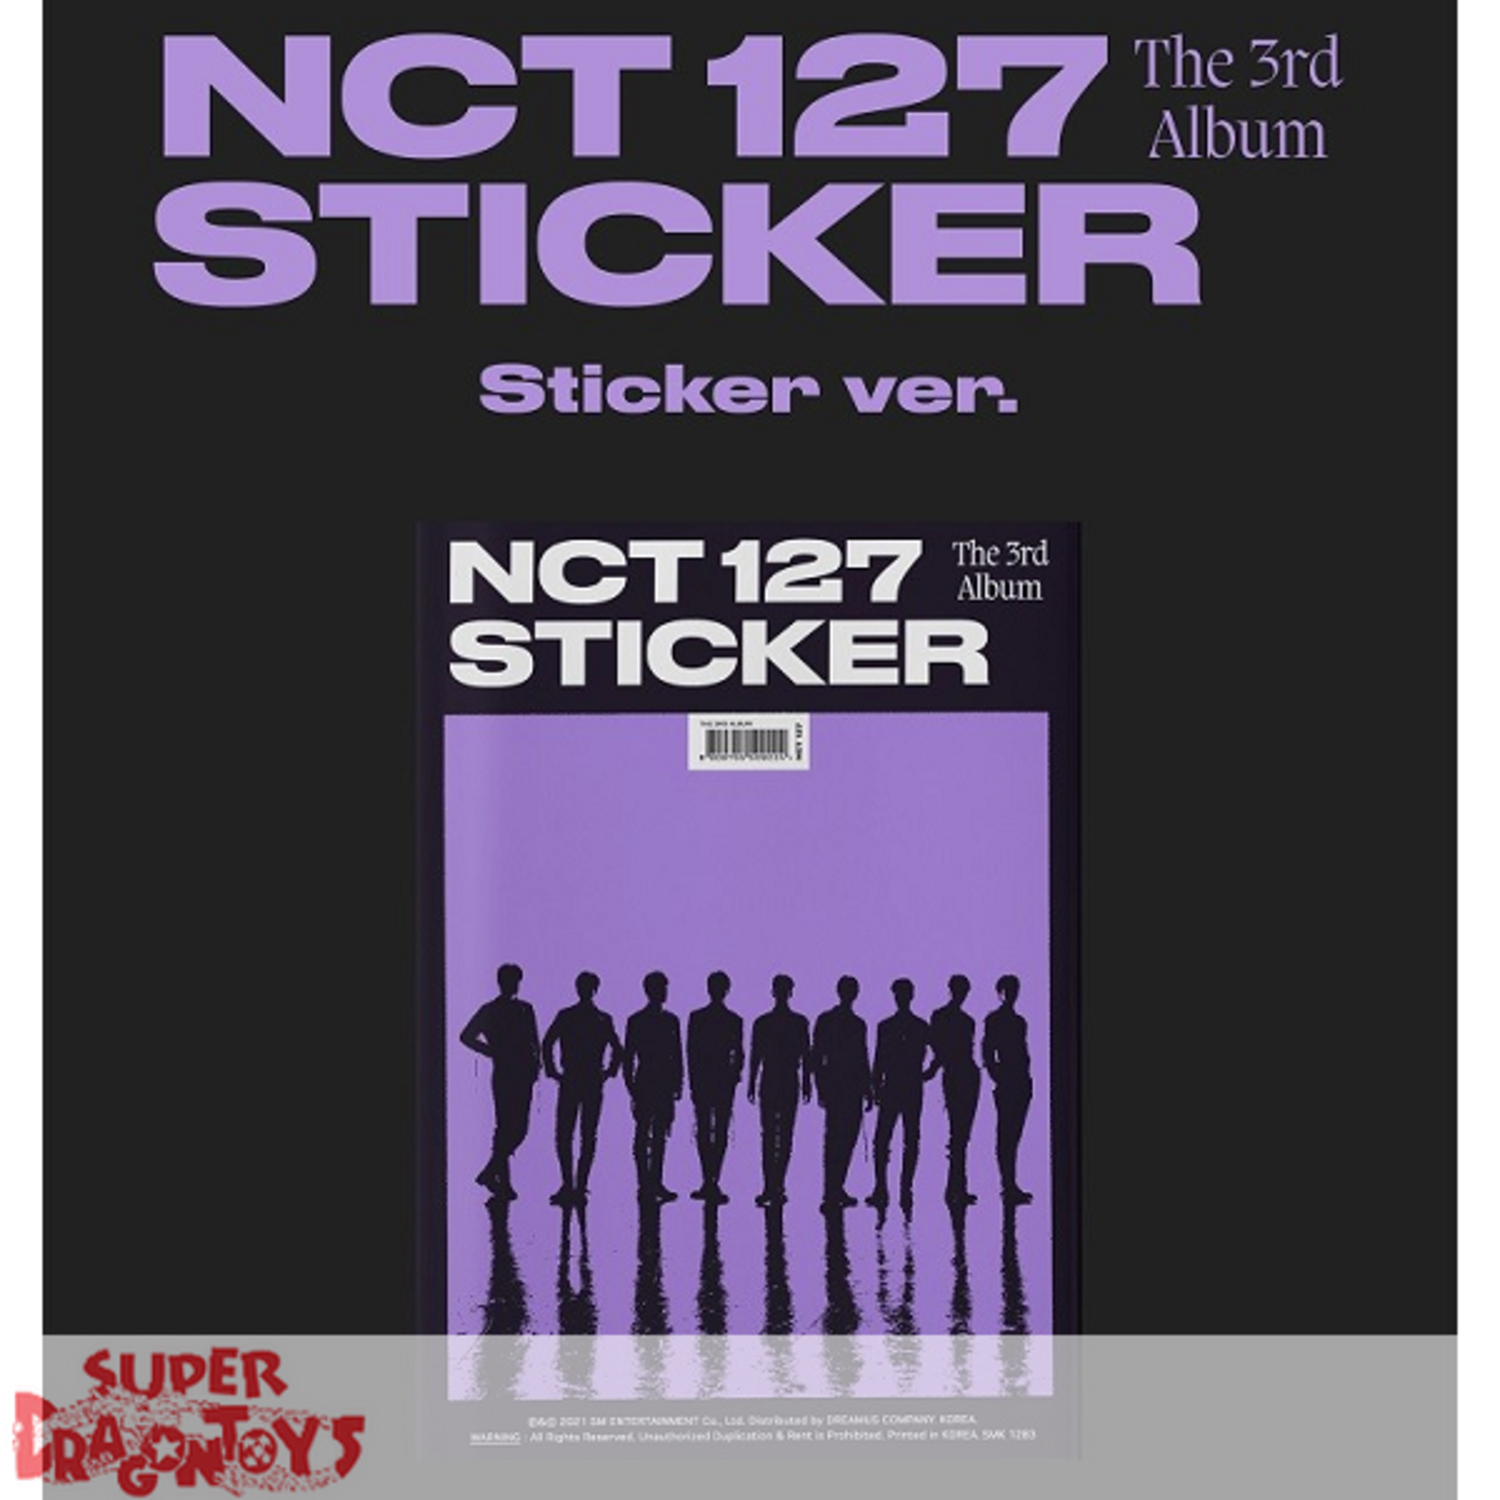 NCT127 STICKERS [PHOTOBOOK VERSION] 3RD ALBUM SUPERDRAGONTOYS